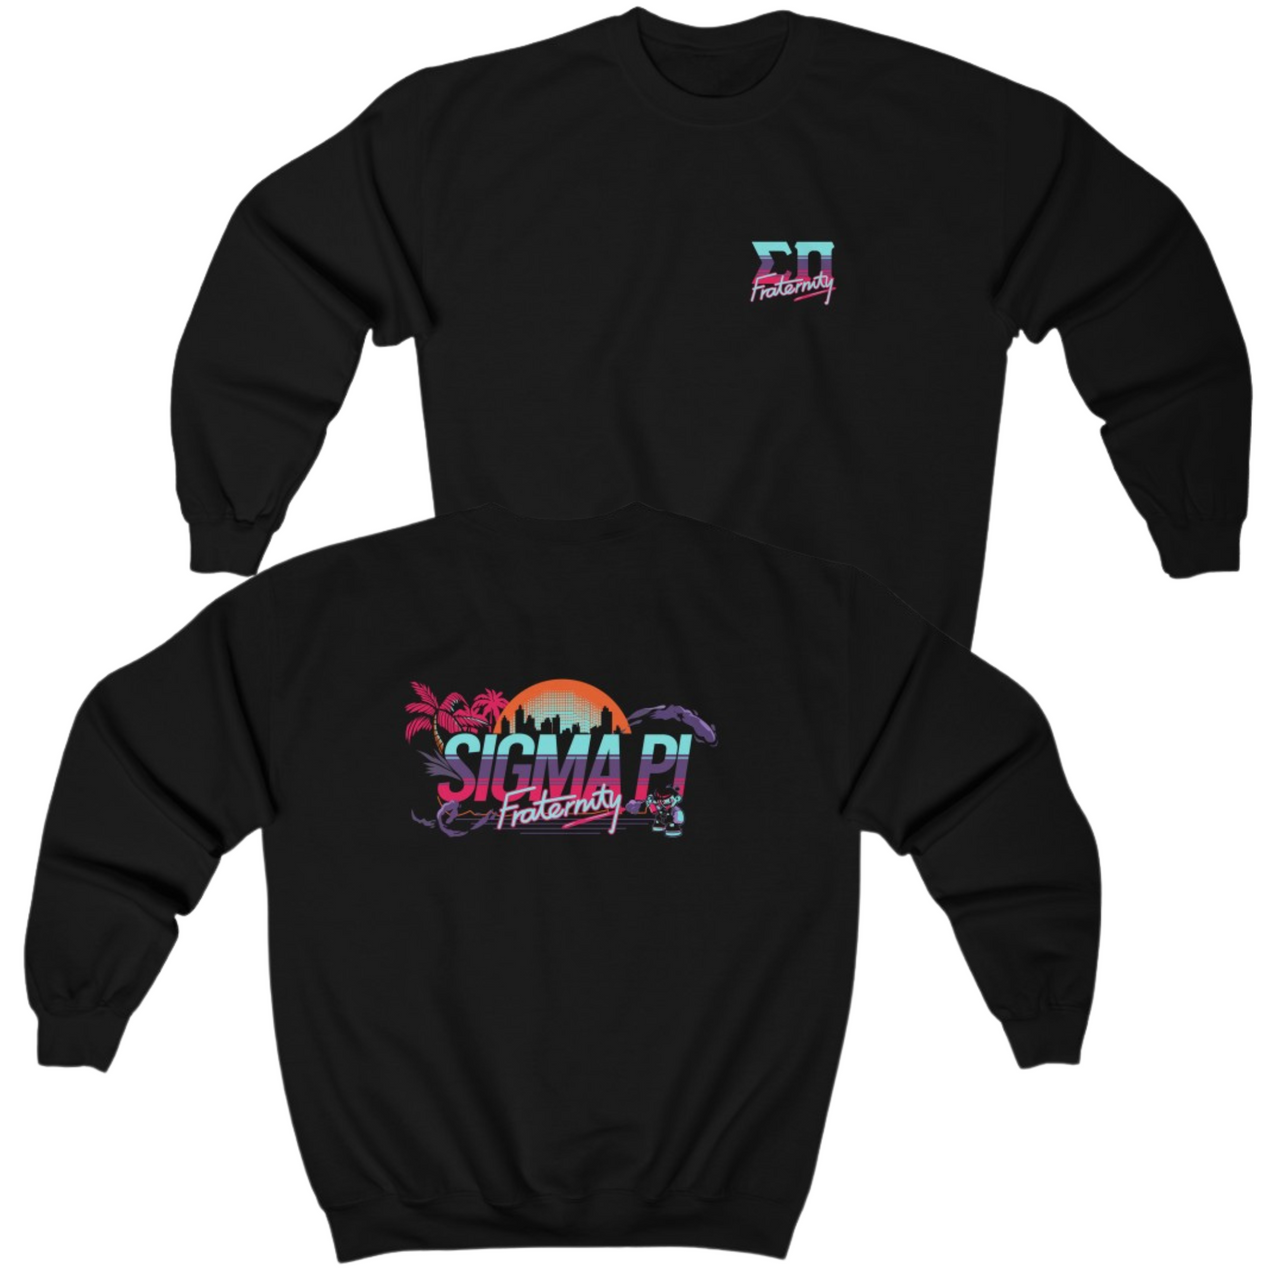 Black Sigma Pi Graphic Crewneck Sweatshirt | Jump Street | Sigma Pi Apparel and Merchandise